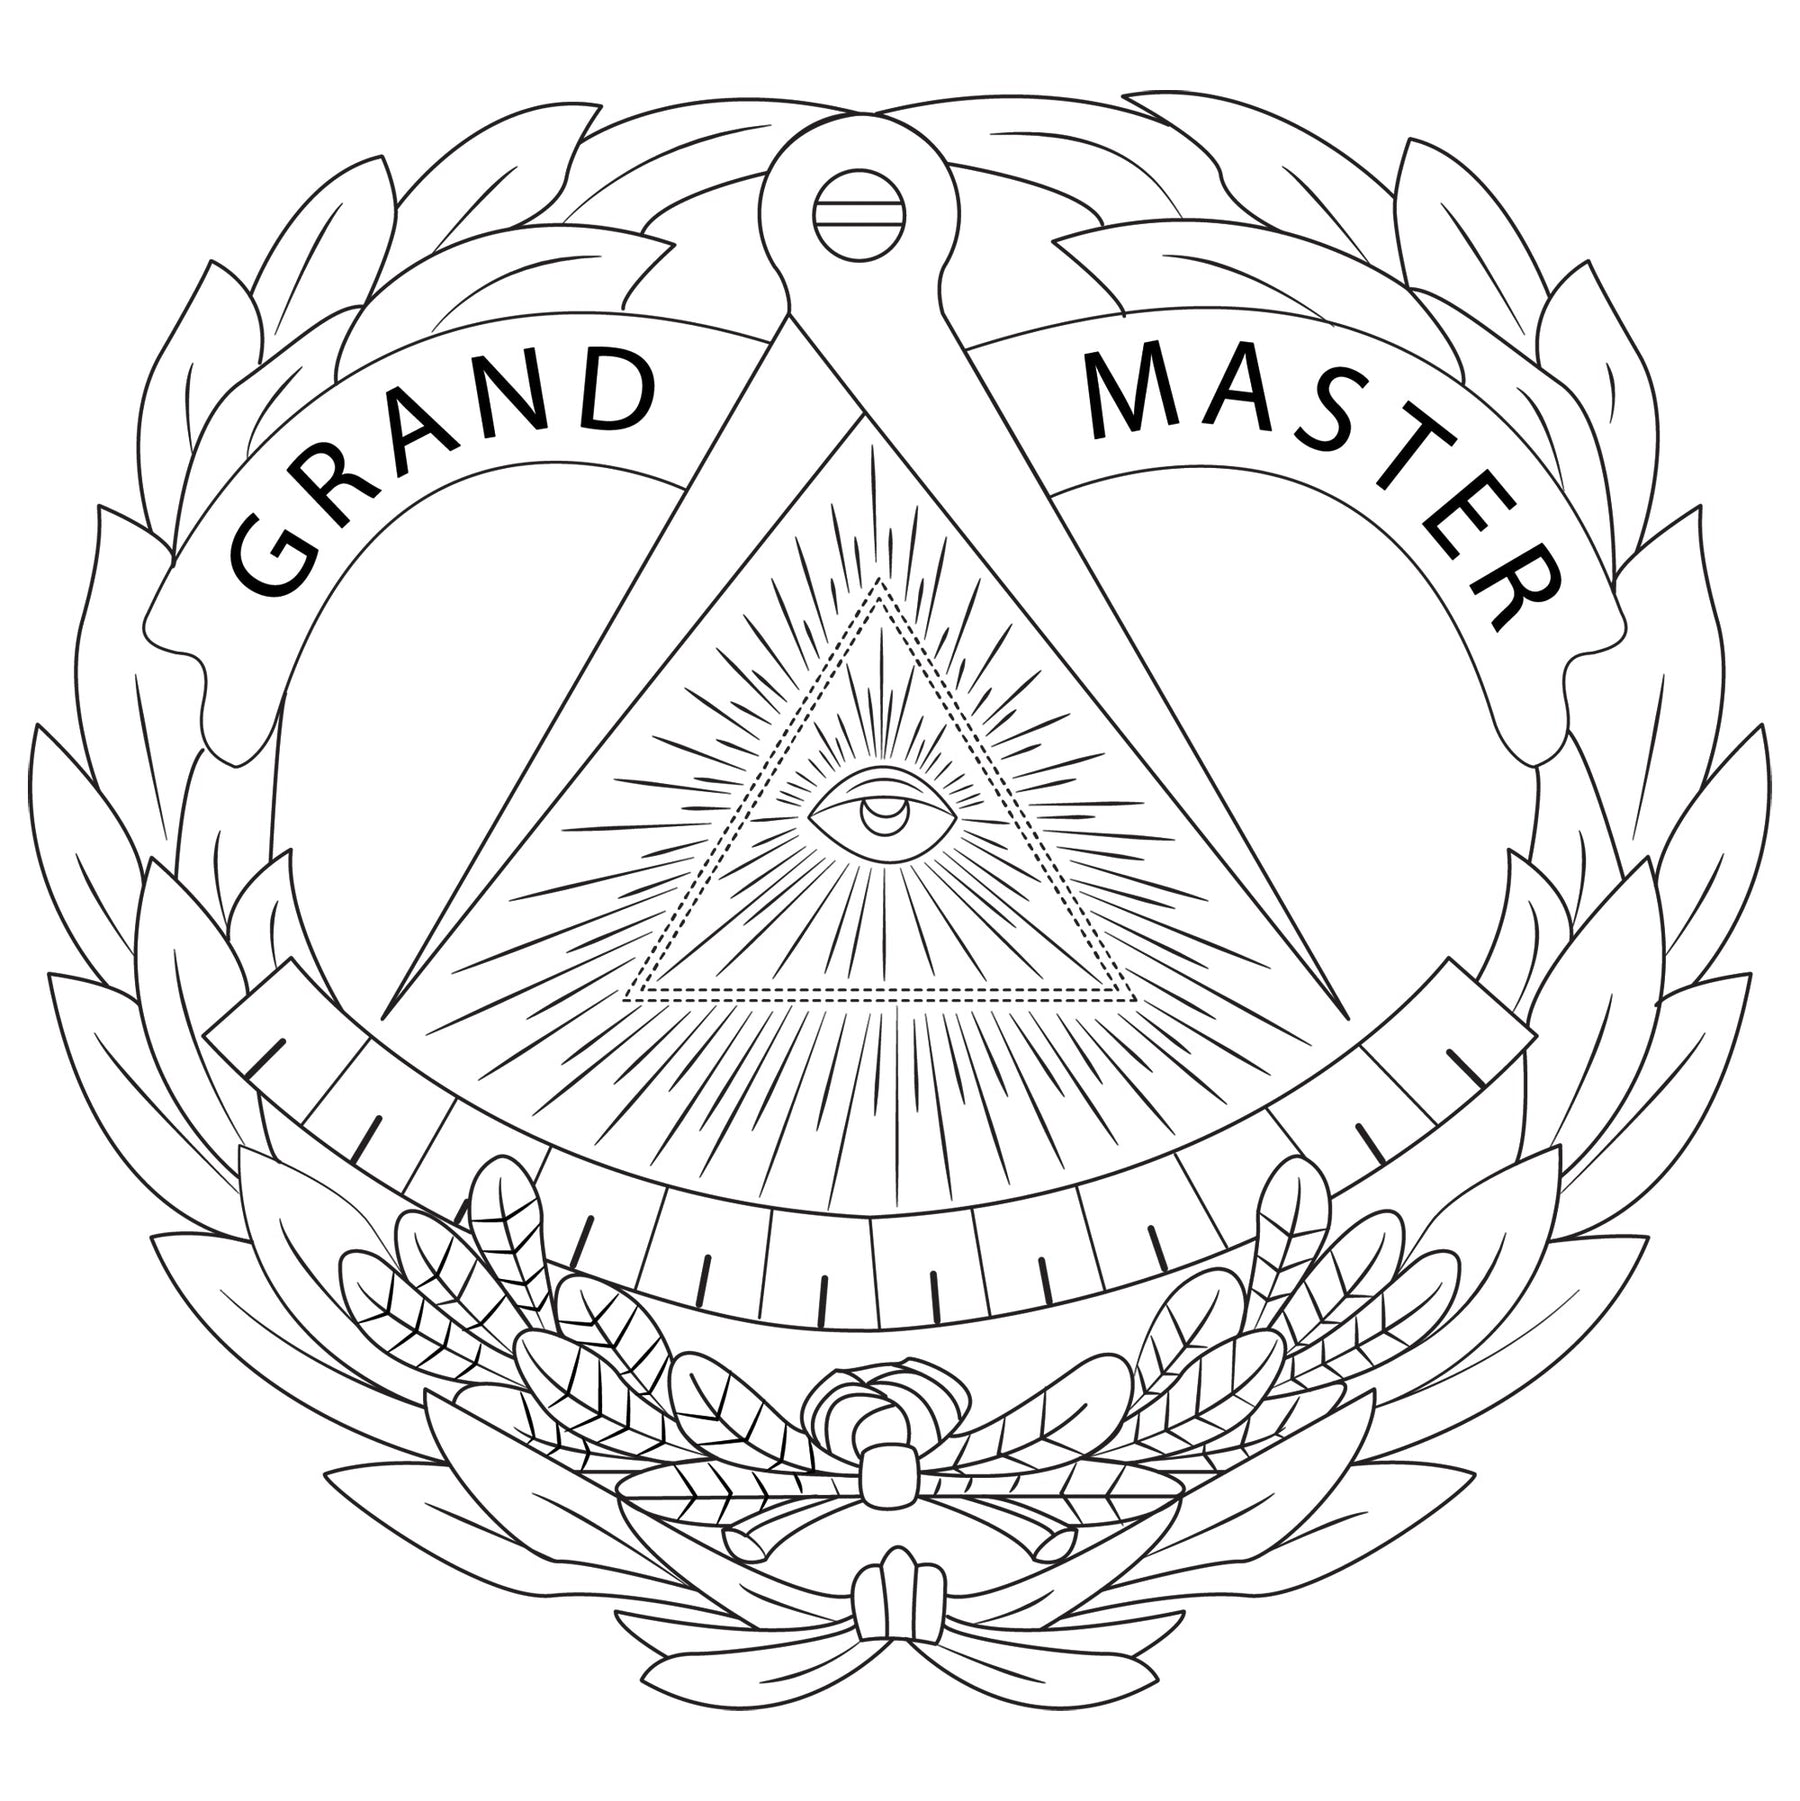 Grand Master Blue Lodge Flask - 1oz to 18oz - Bricks Masons